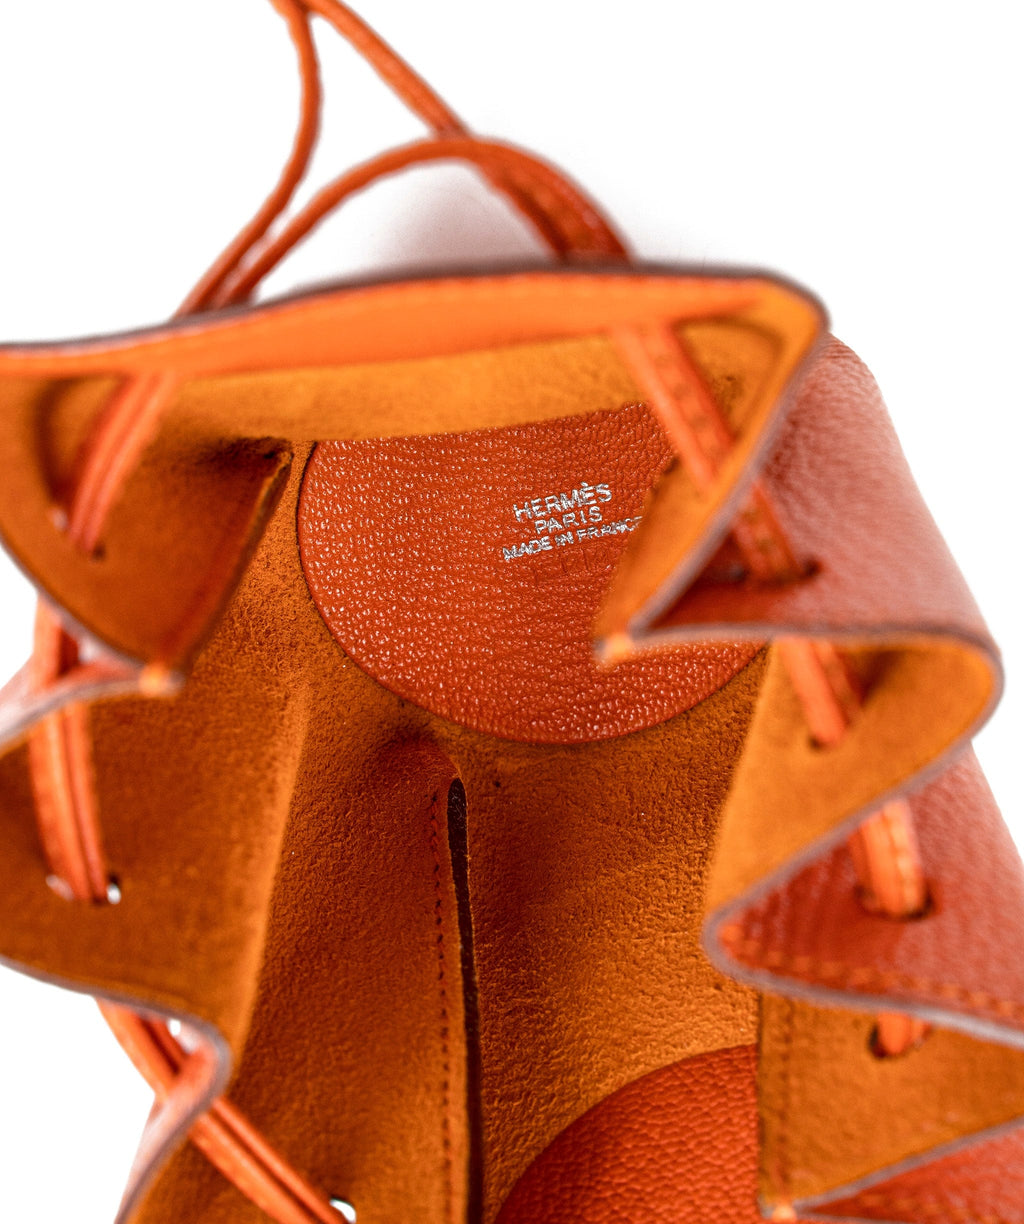 Hermès - Red/orange Vespa bag